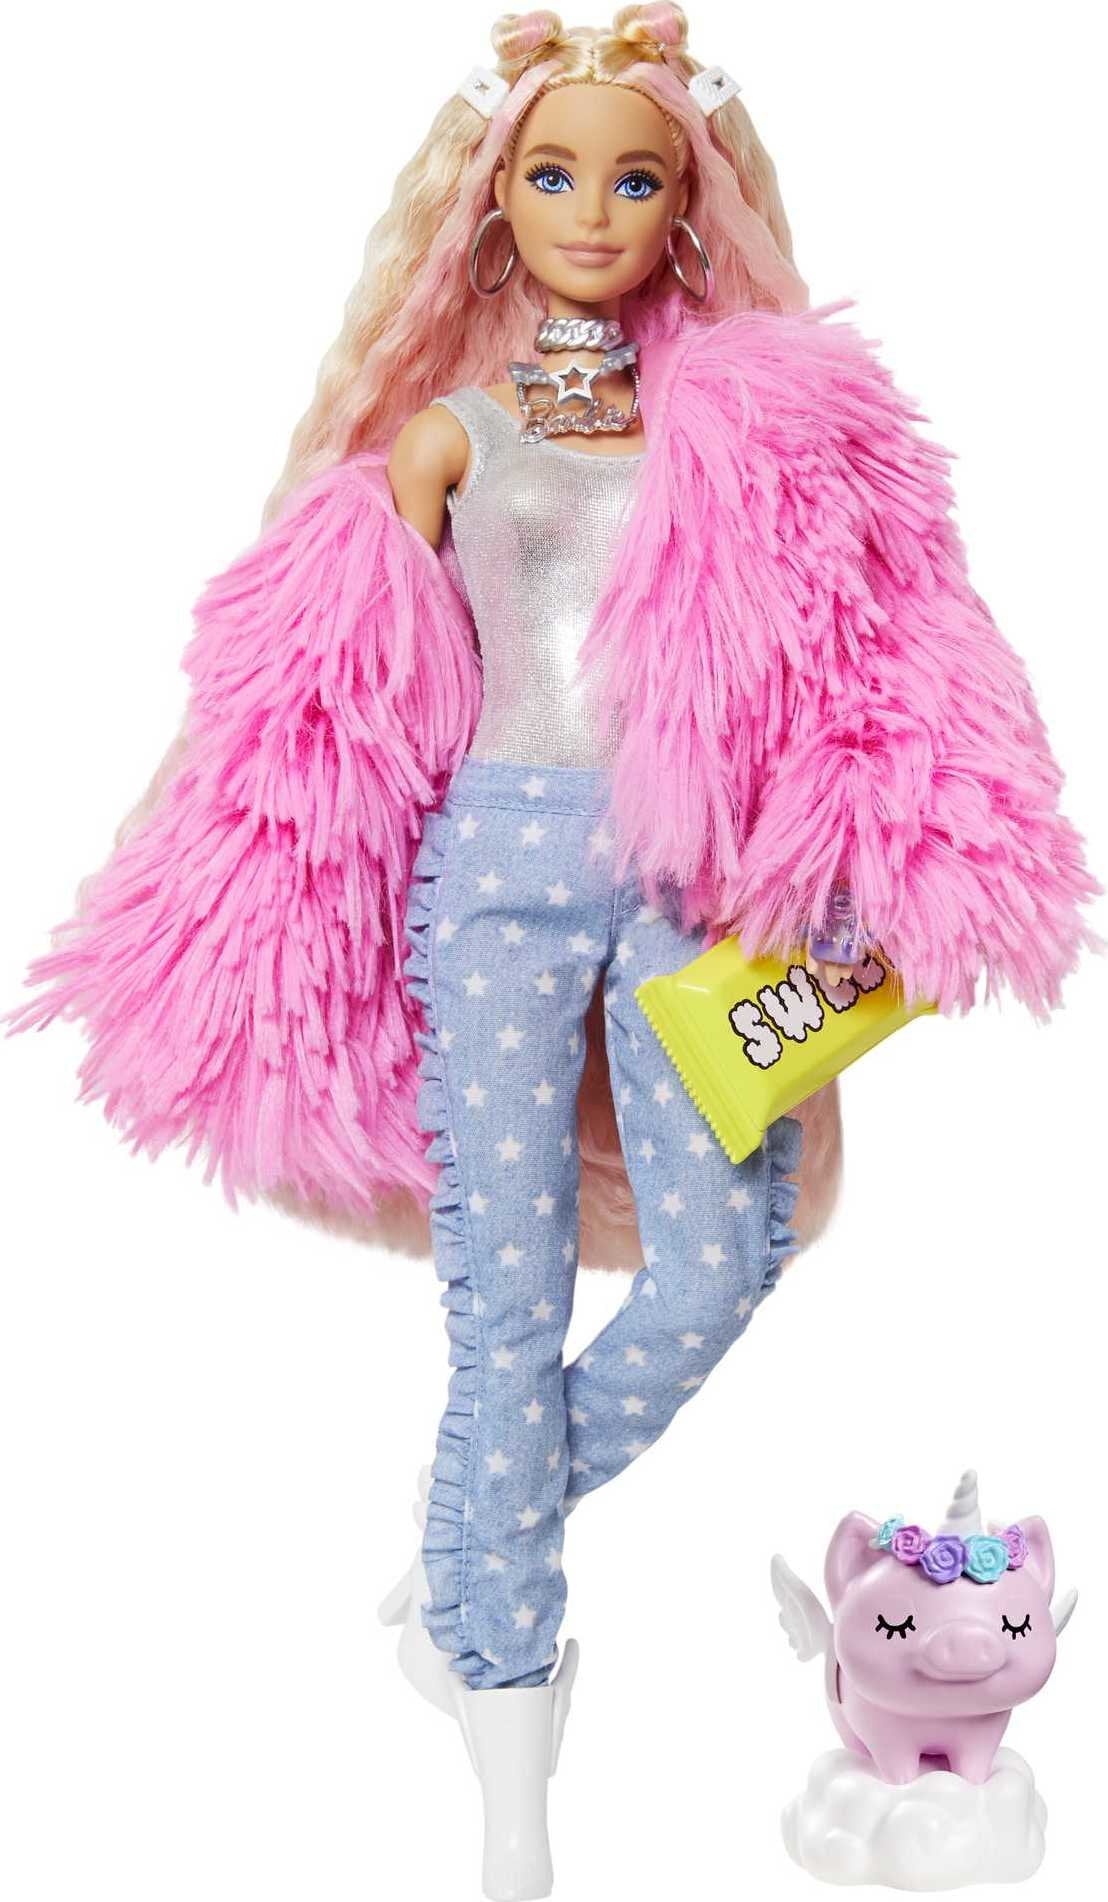 NEW 2020 Barbie Extra Doll Flying Pink Pig Unicorn Headband Cloud Accessory 